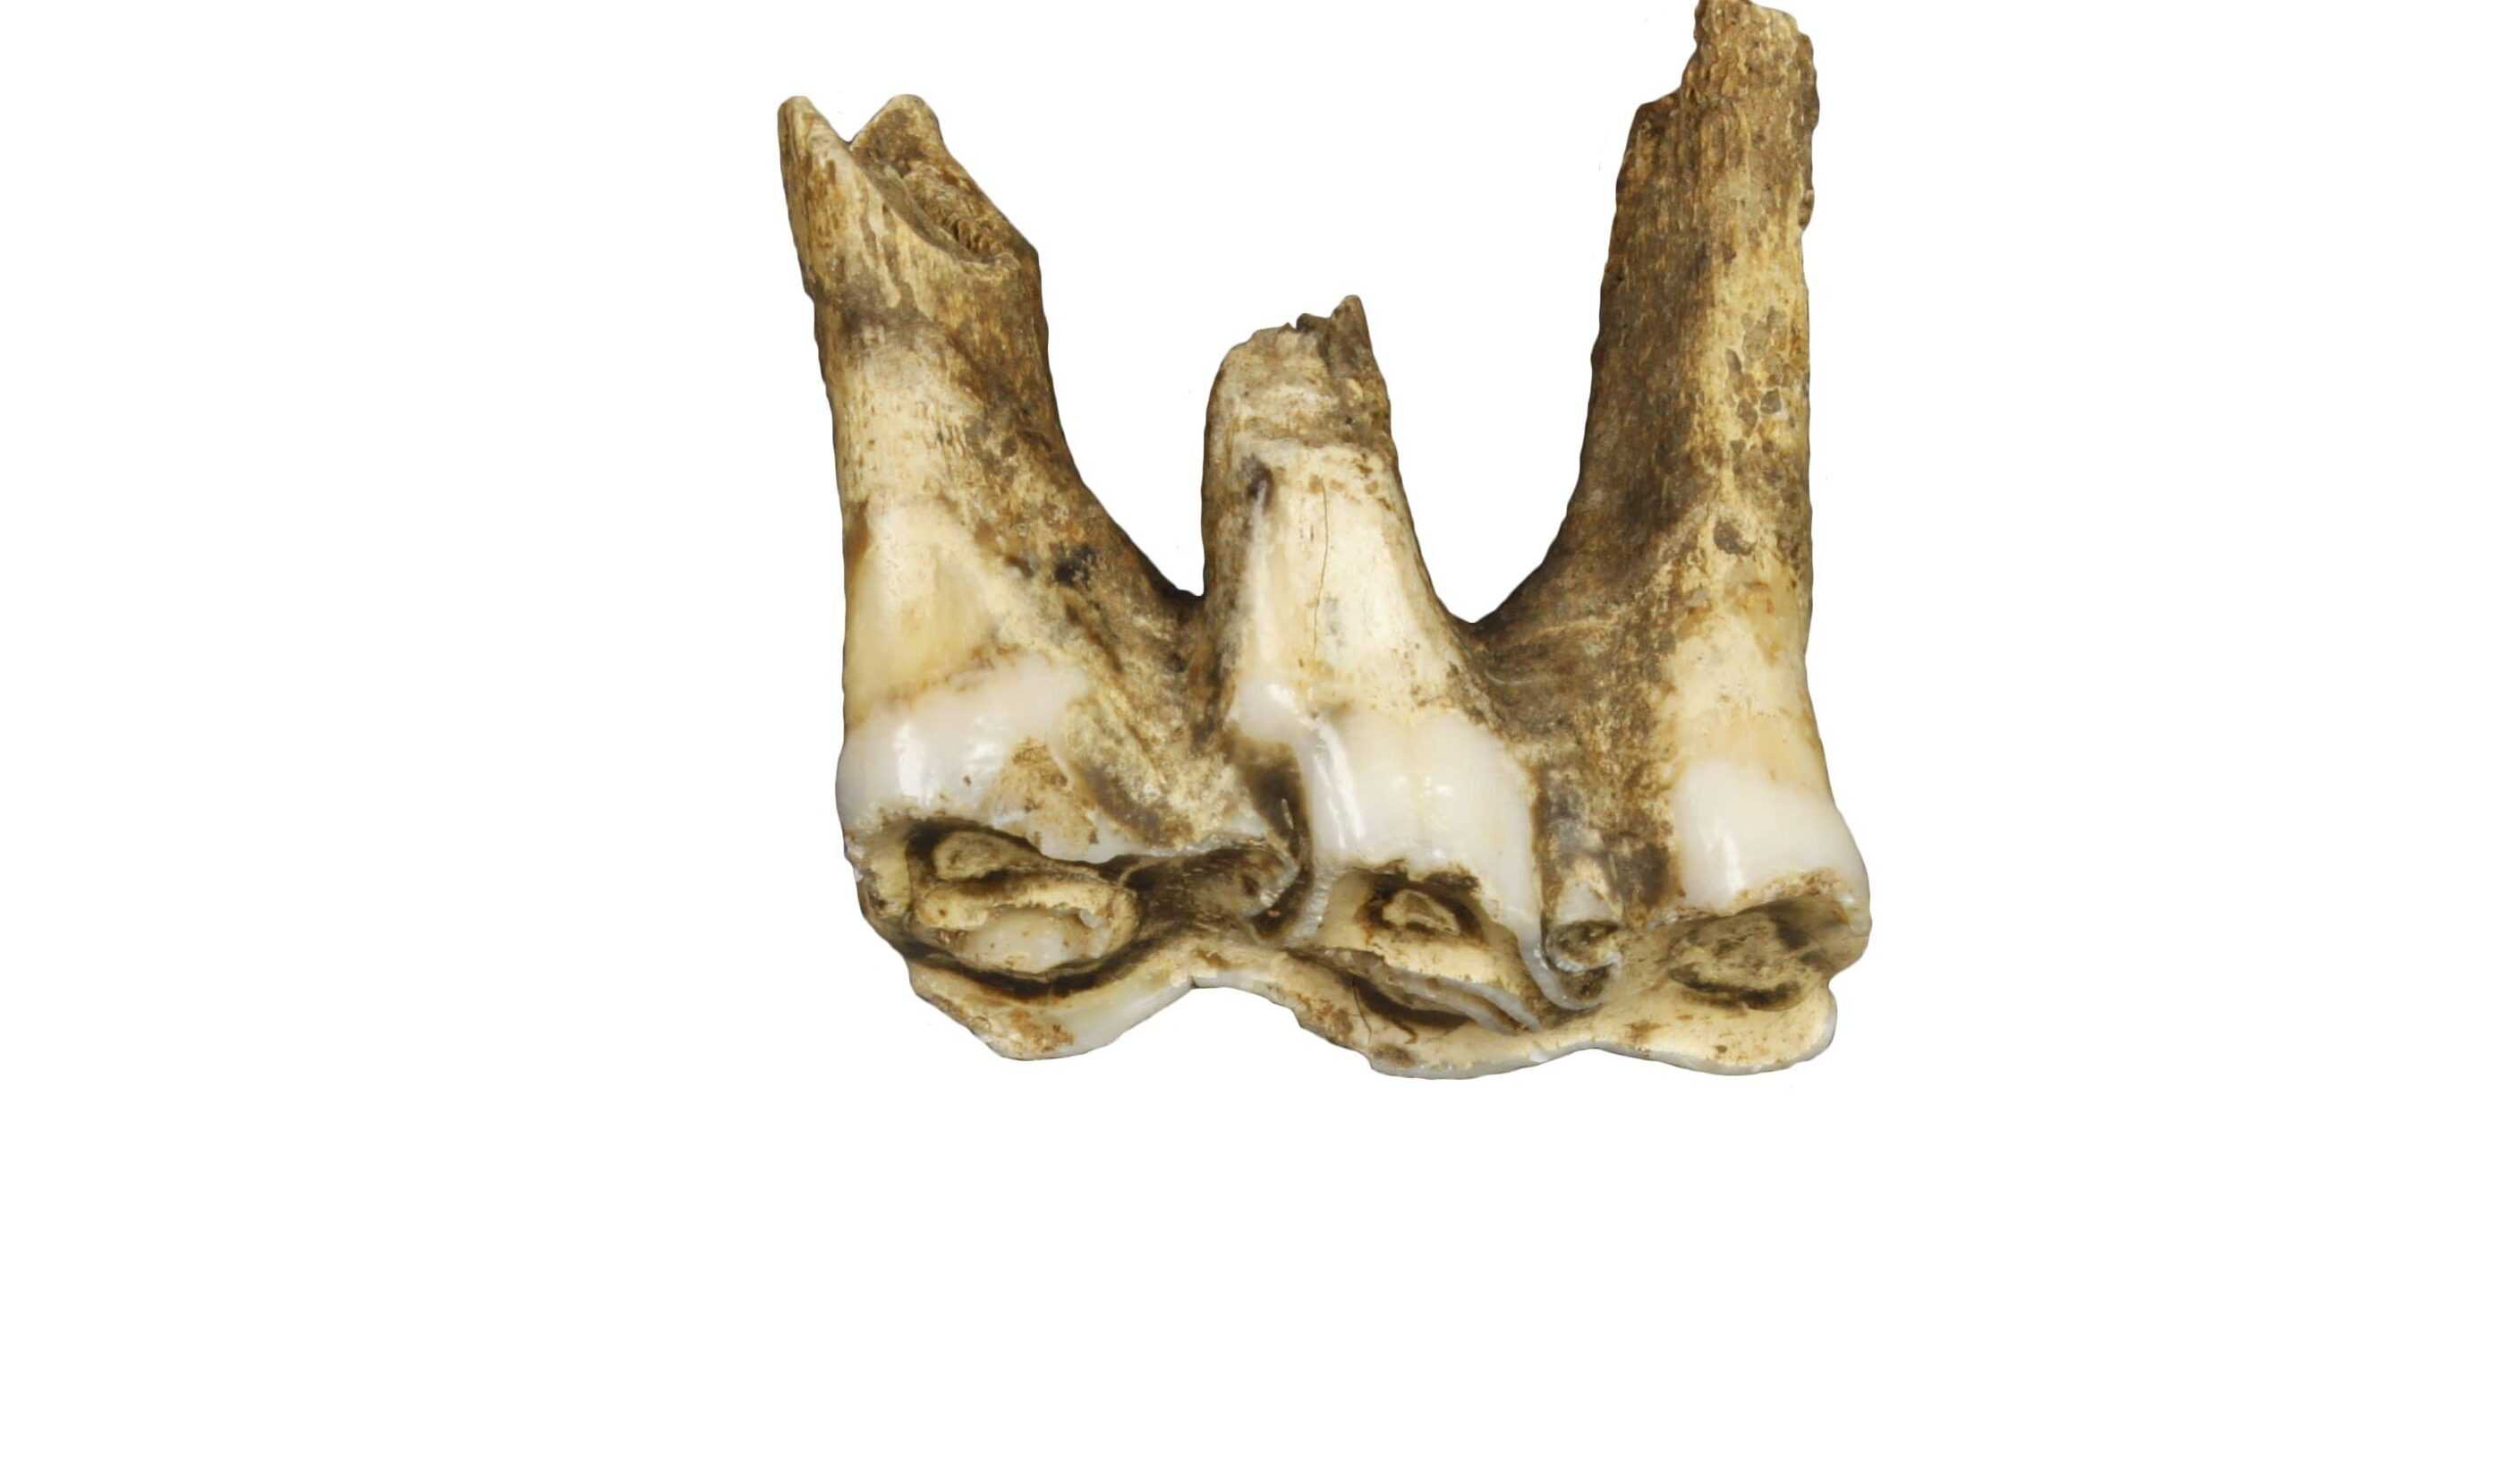 Photograph of an animal molar